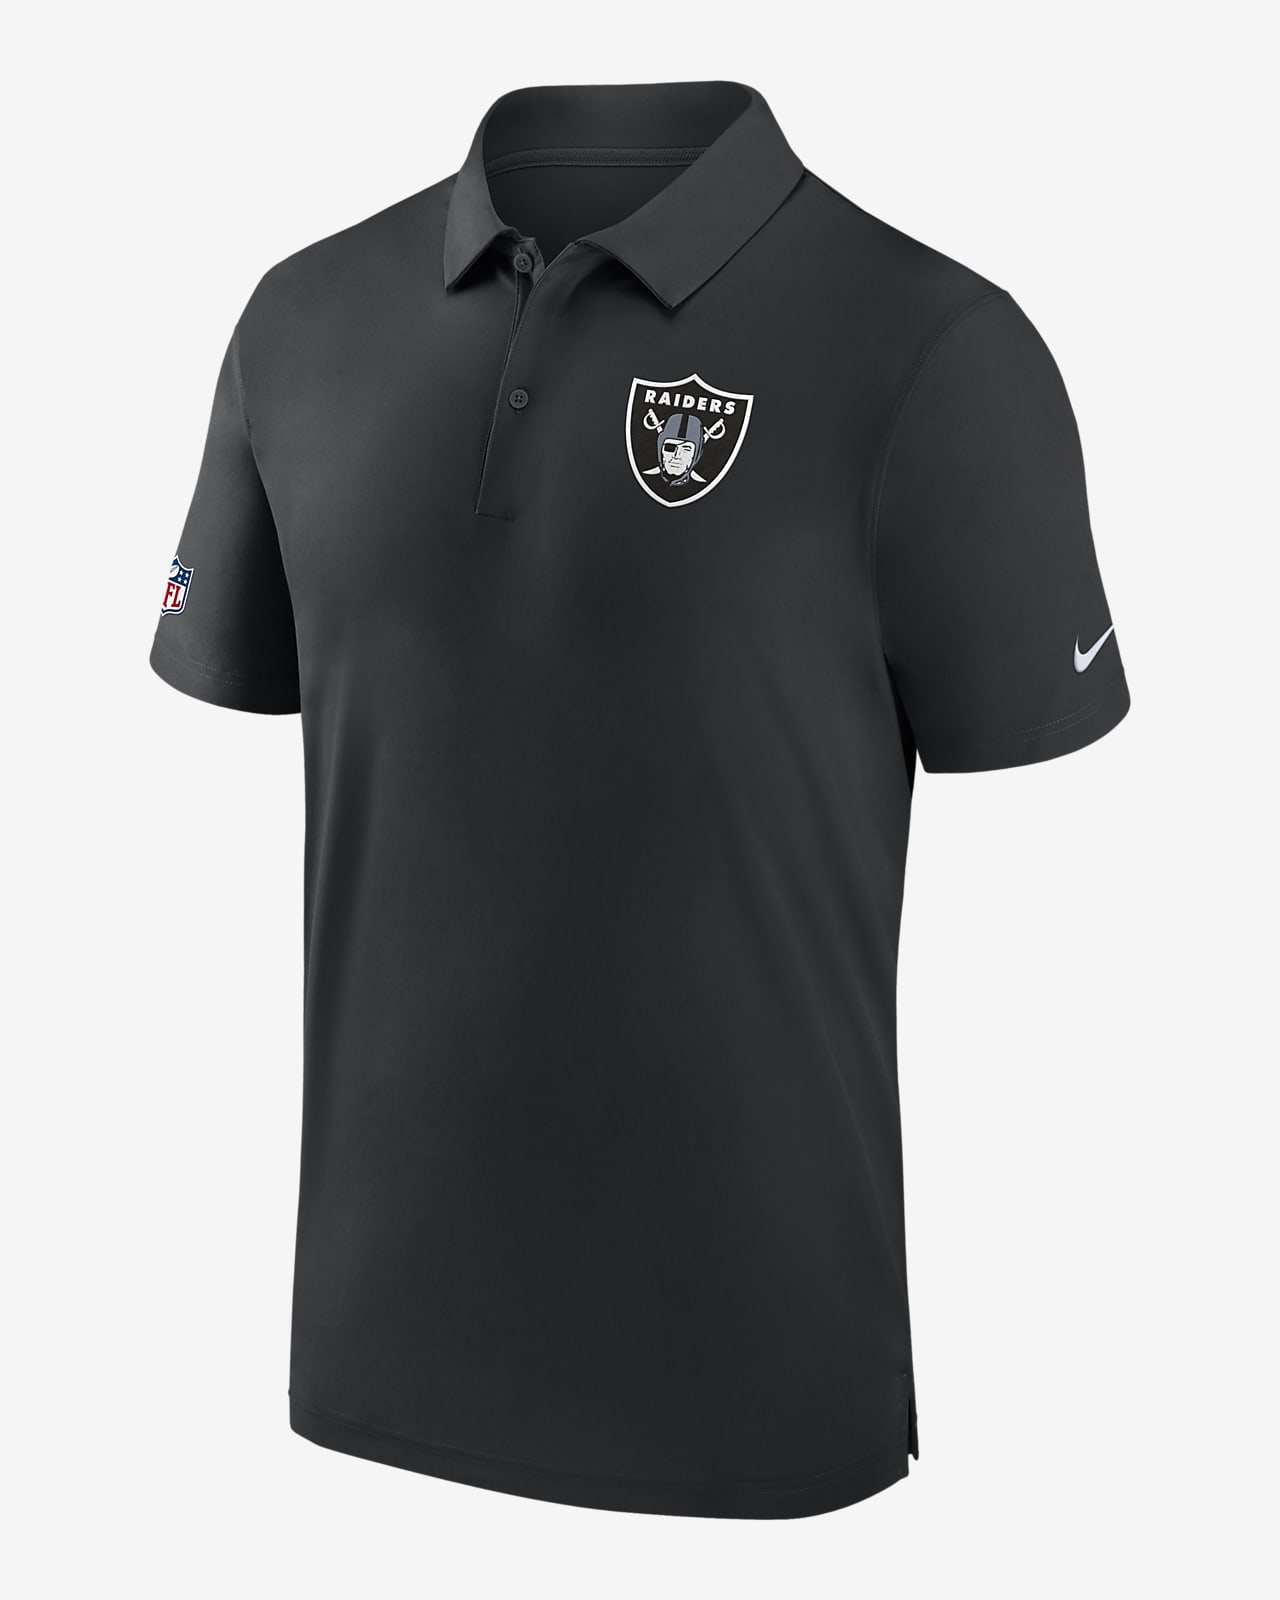 Las Vegas Raiders Sideline Coach Men's Nike Dri-FIT NFL Polo.